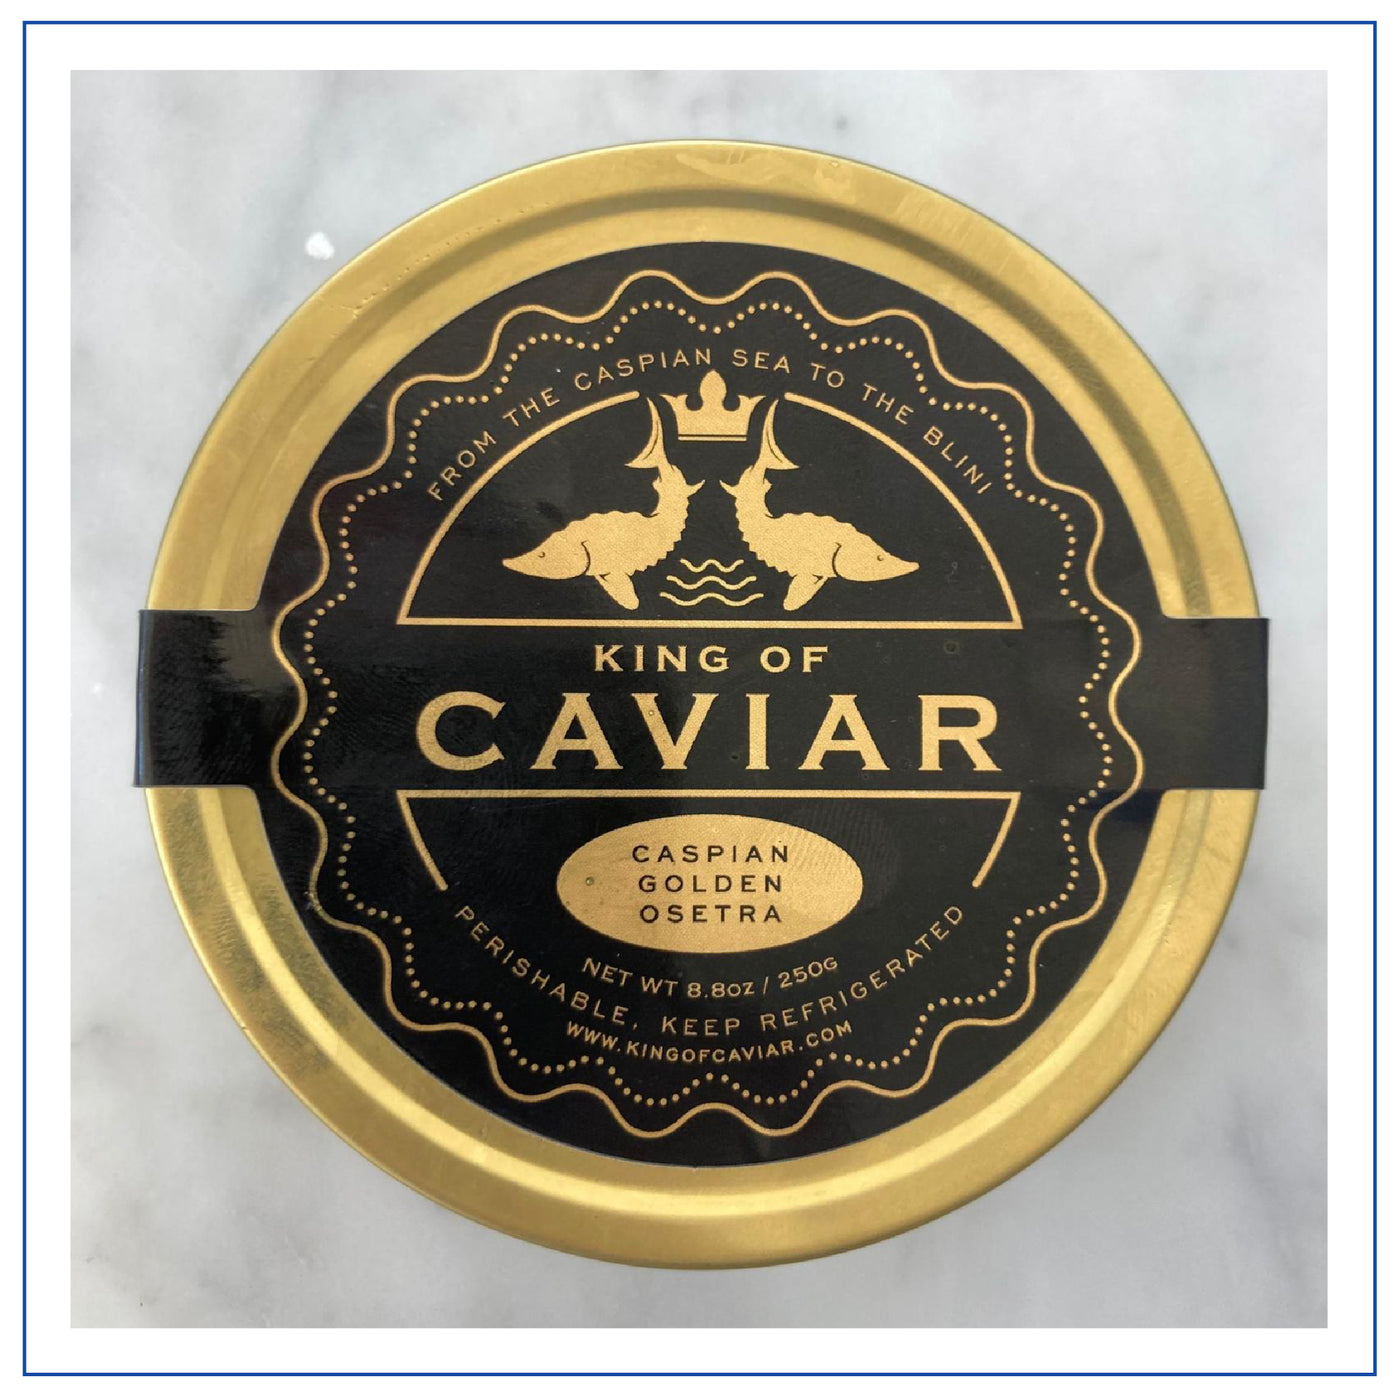 Caviar Caspian golden osetra